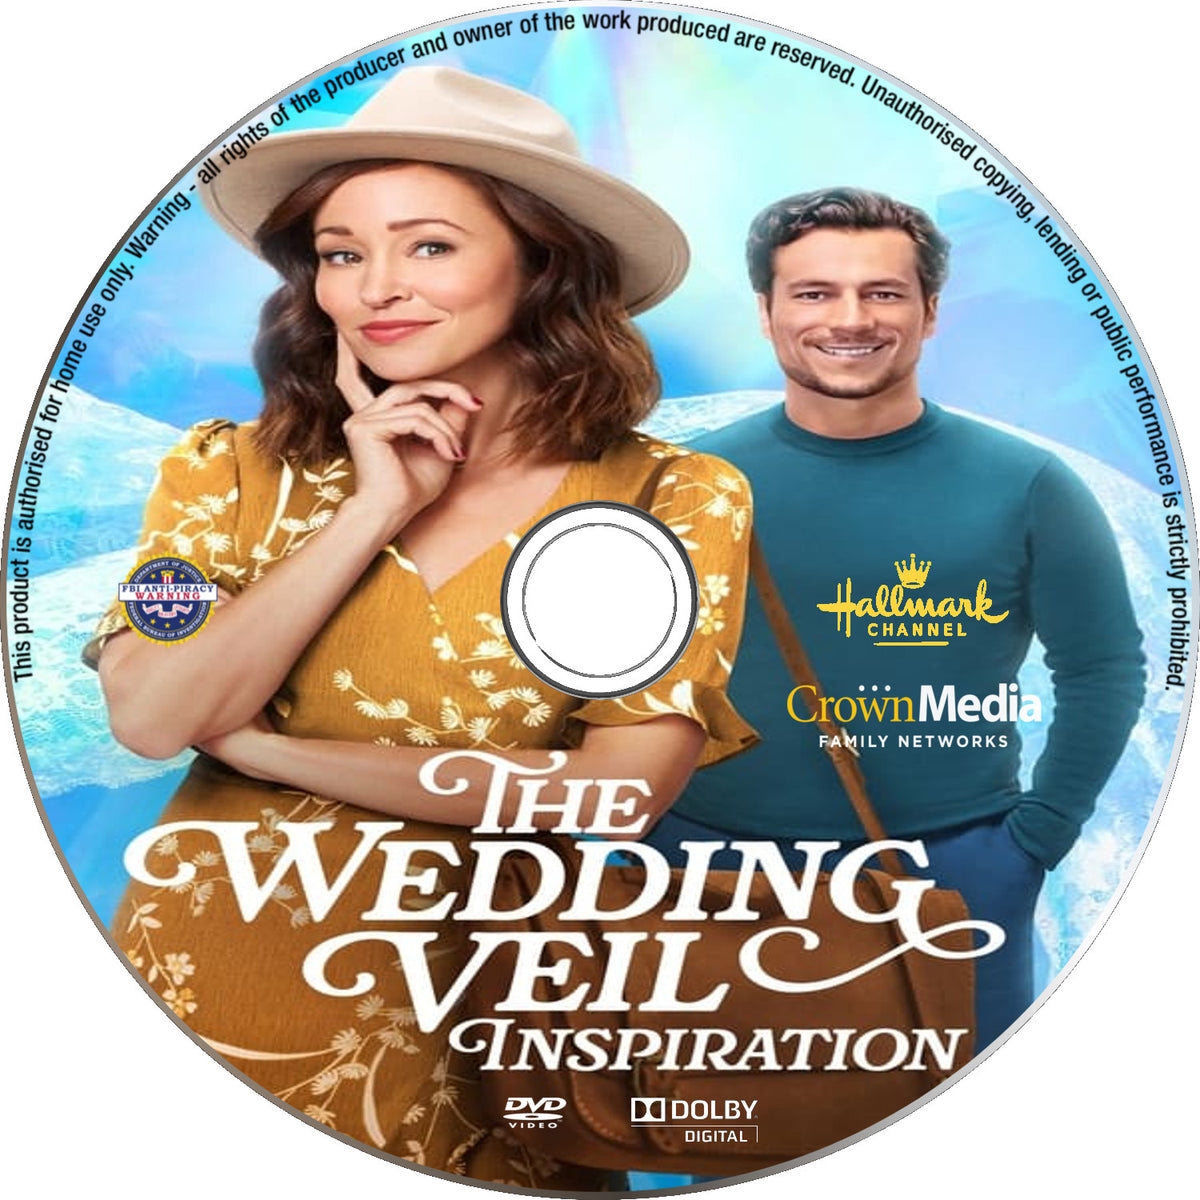 The Wedding Veil Movies